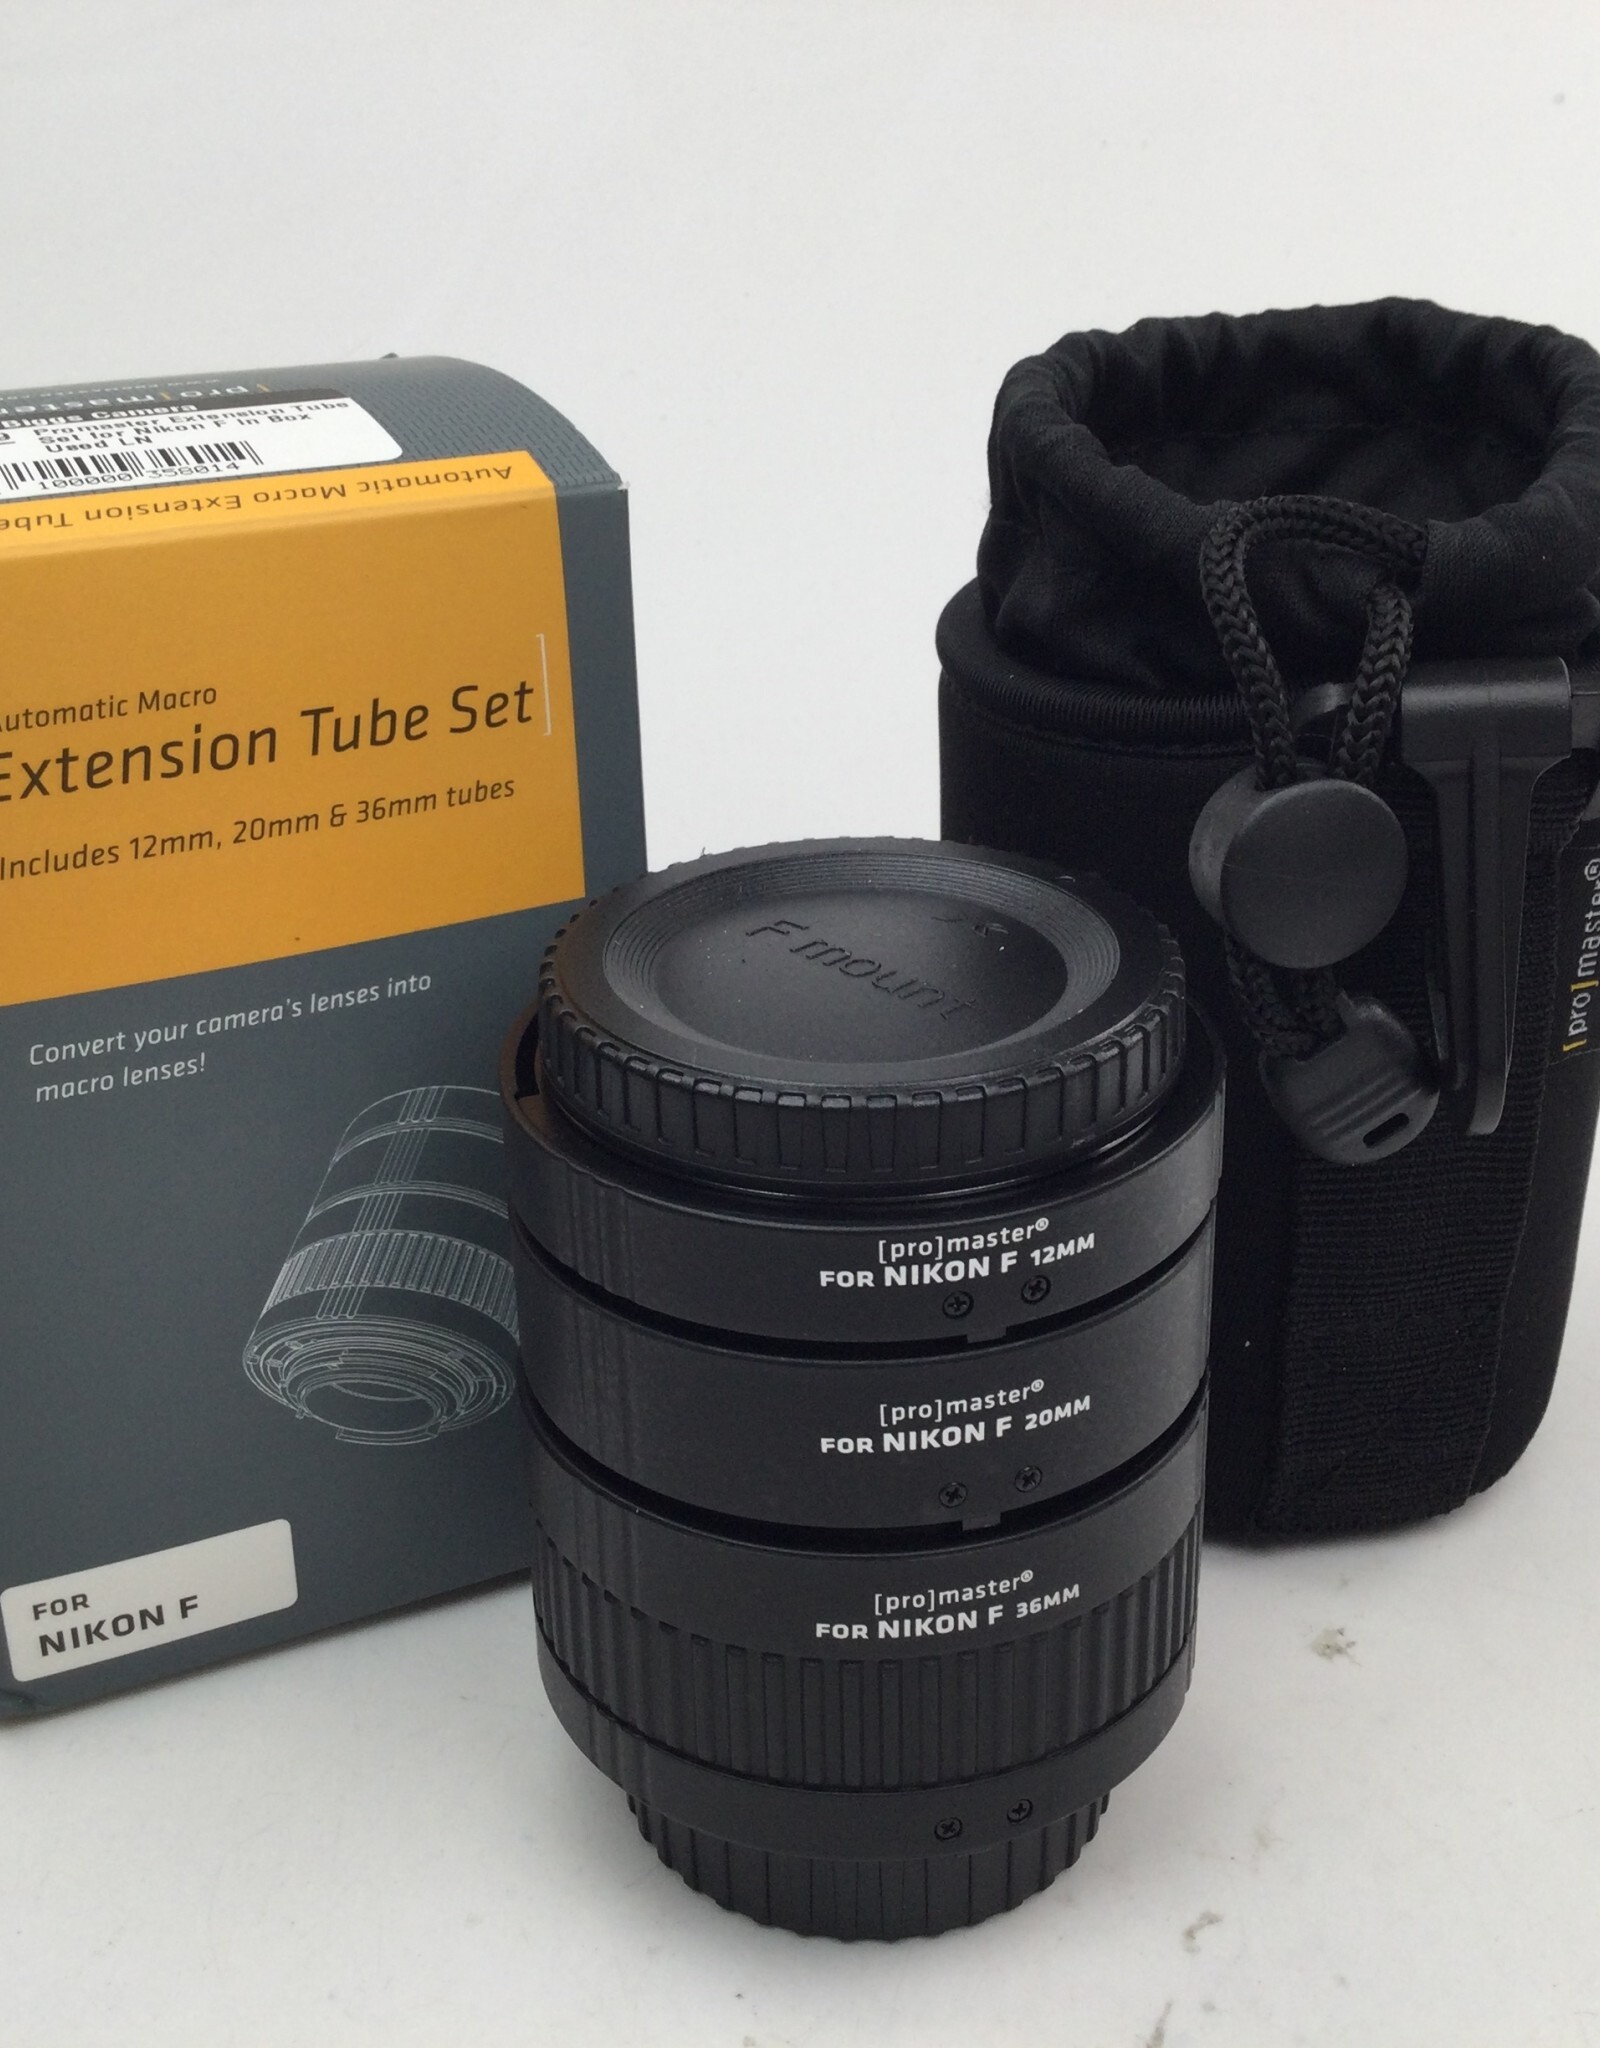 NIKON Promaster Extension Tube Set for Nikon F in Box Used LN